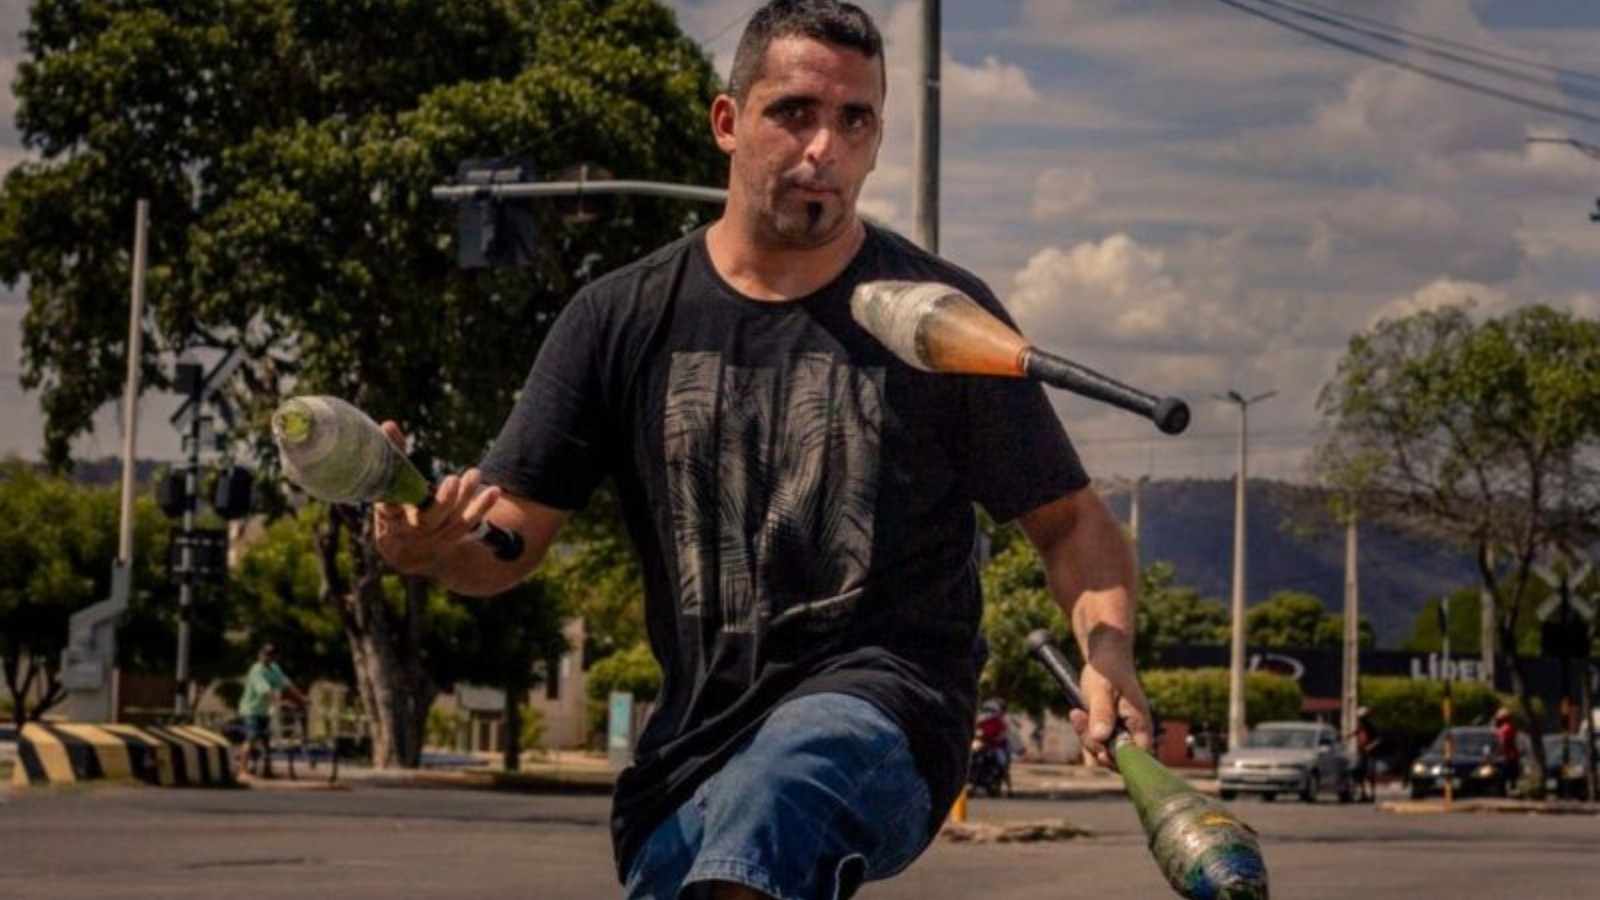 Artista de rua do Uruguai é assassinado a golpes de faca no Ceará